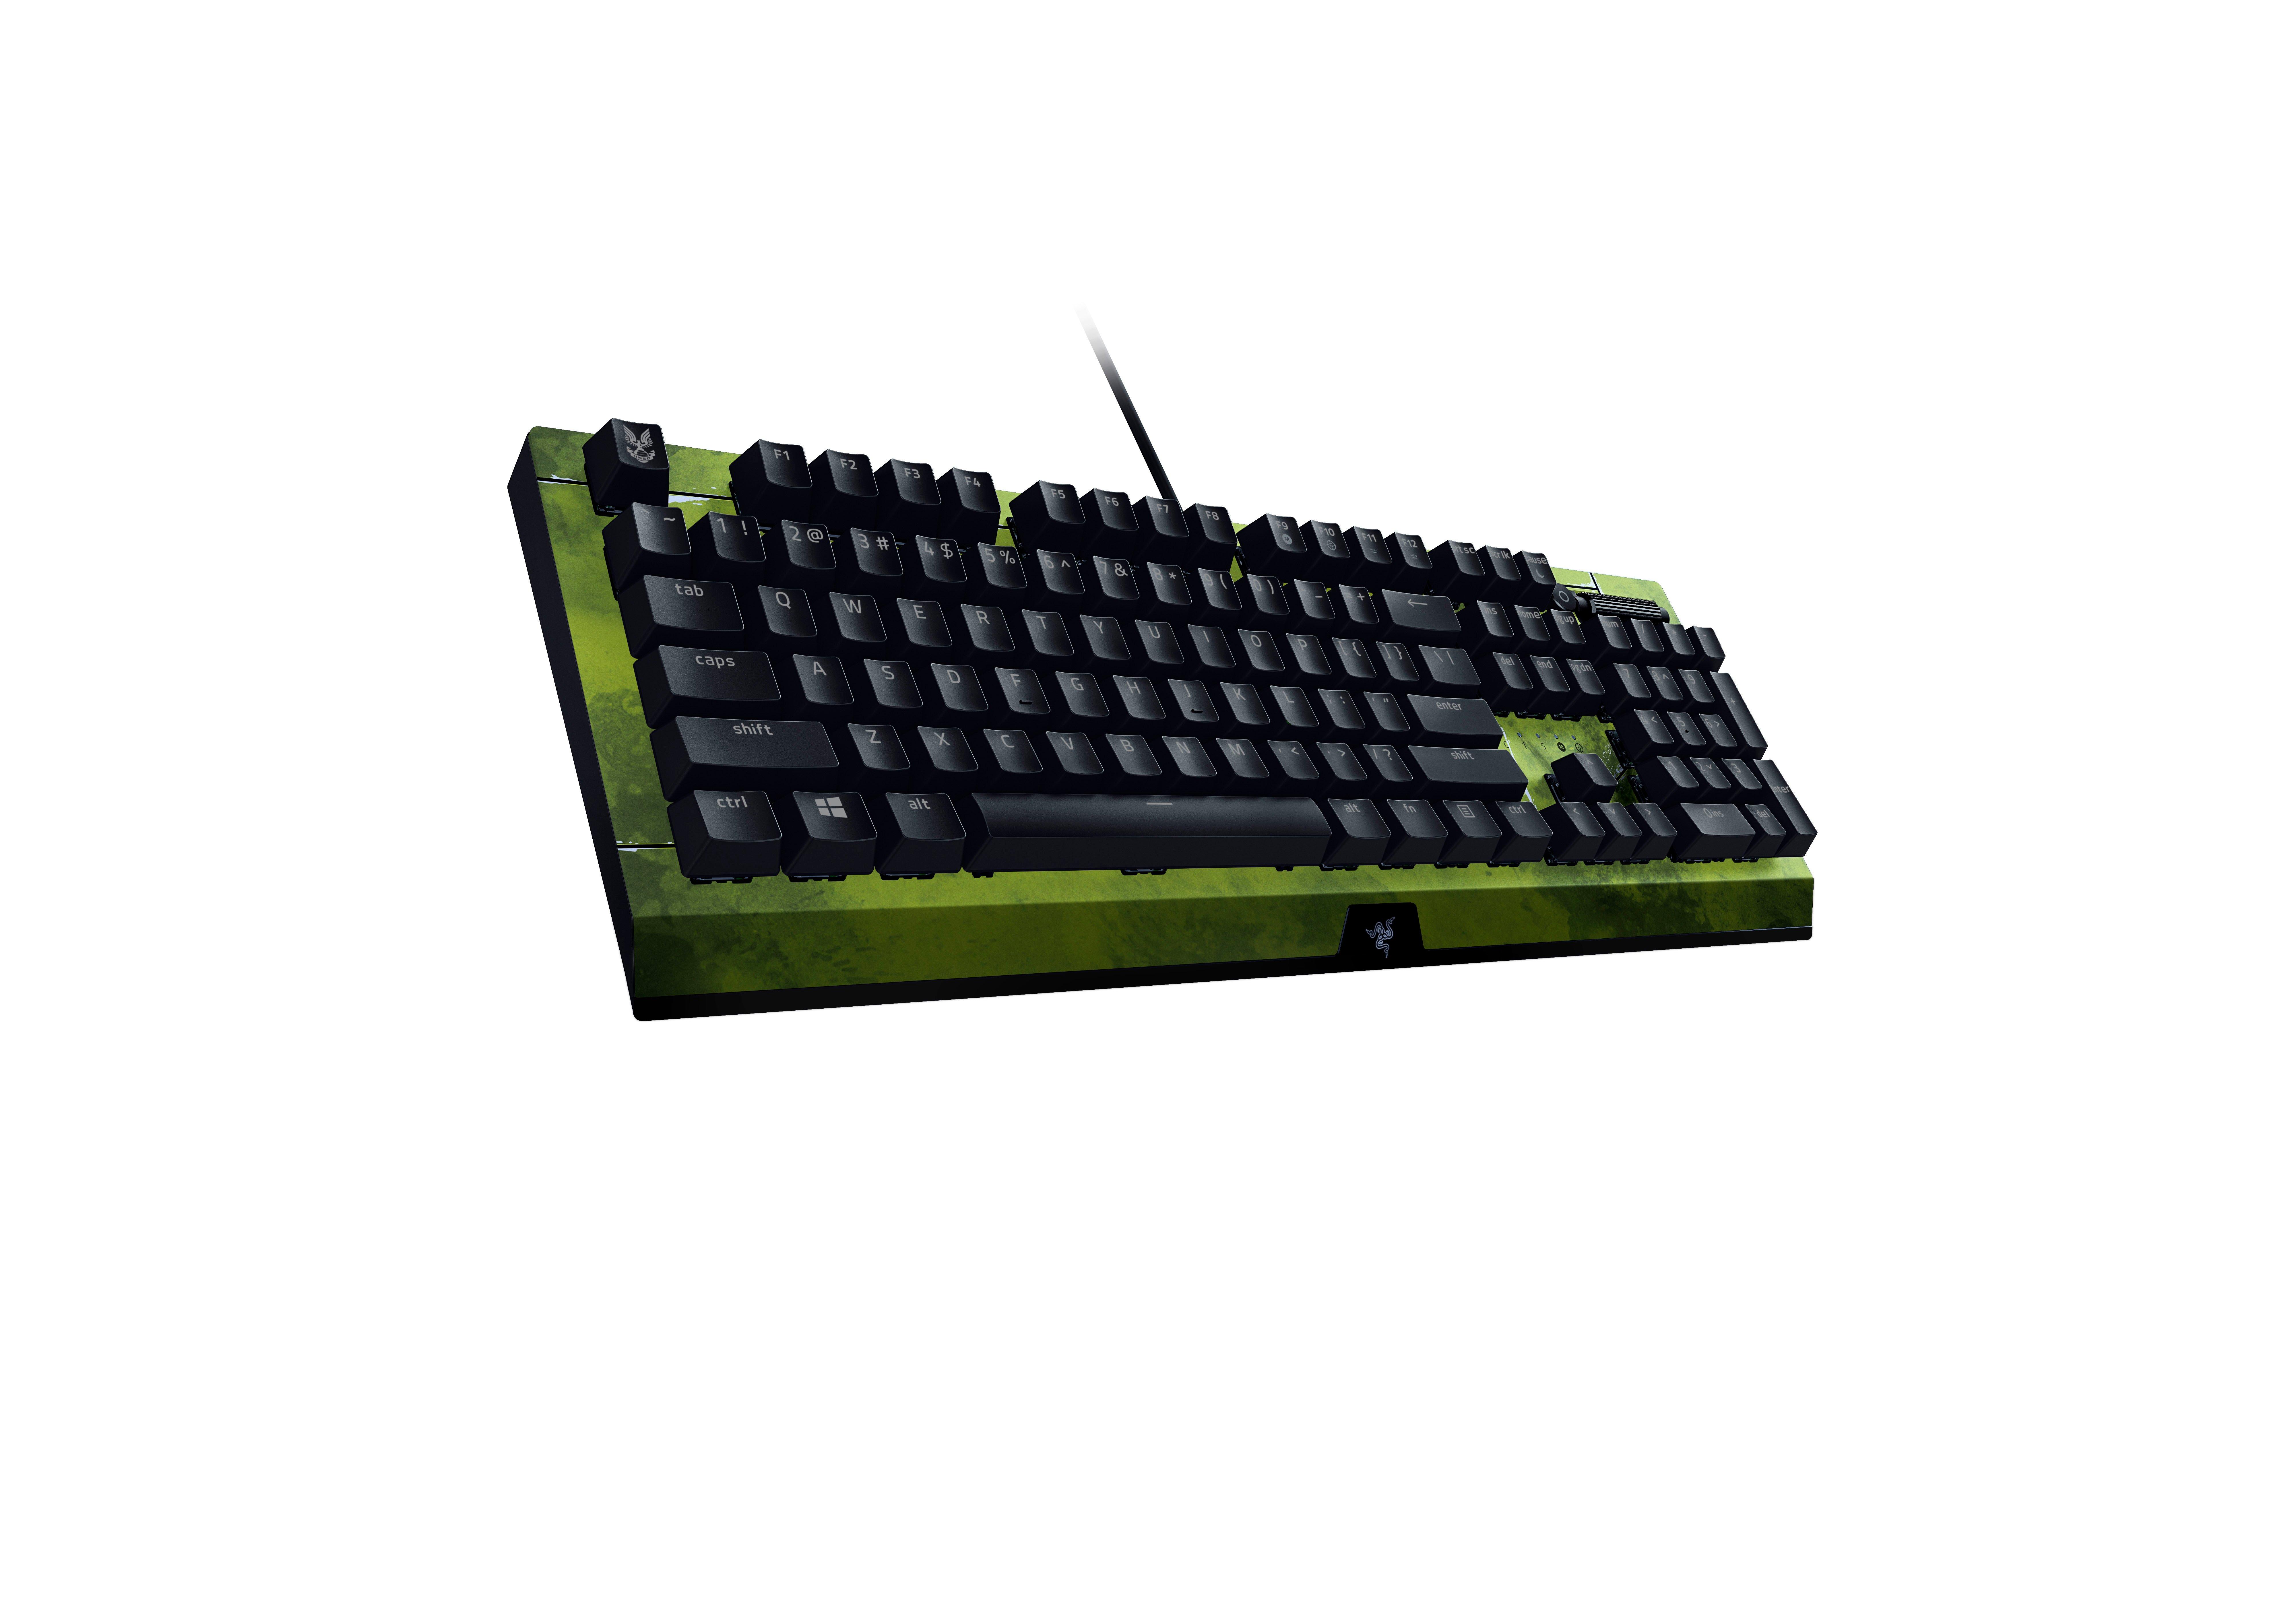 list item 5 of 8 Razer BlackWidow V3 Green Switch Mechanical Gaming Keyboard - Halo Infinite Edition